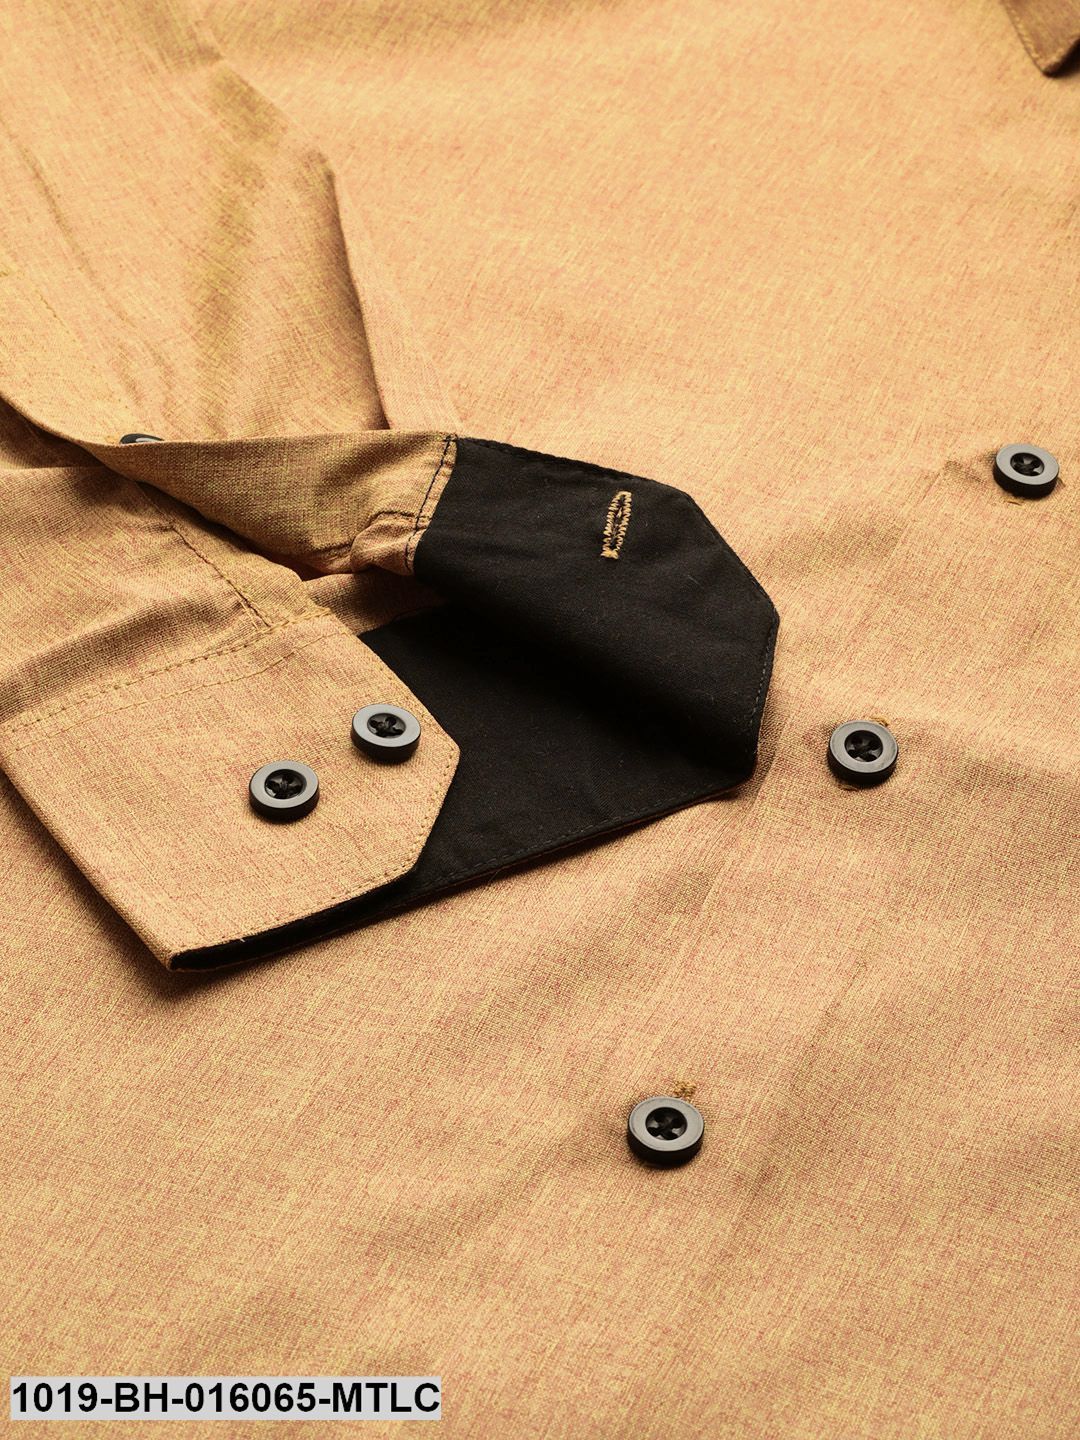 Men's Cotton Metallic Gold Casual Shirt - Sojanya